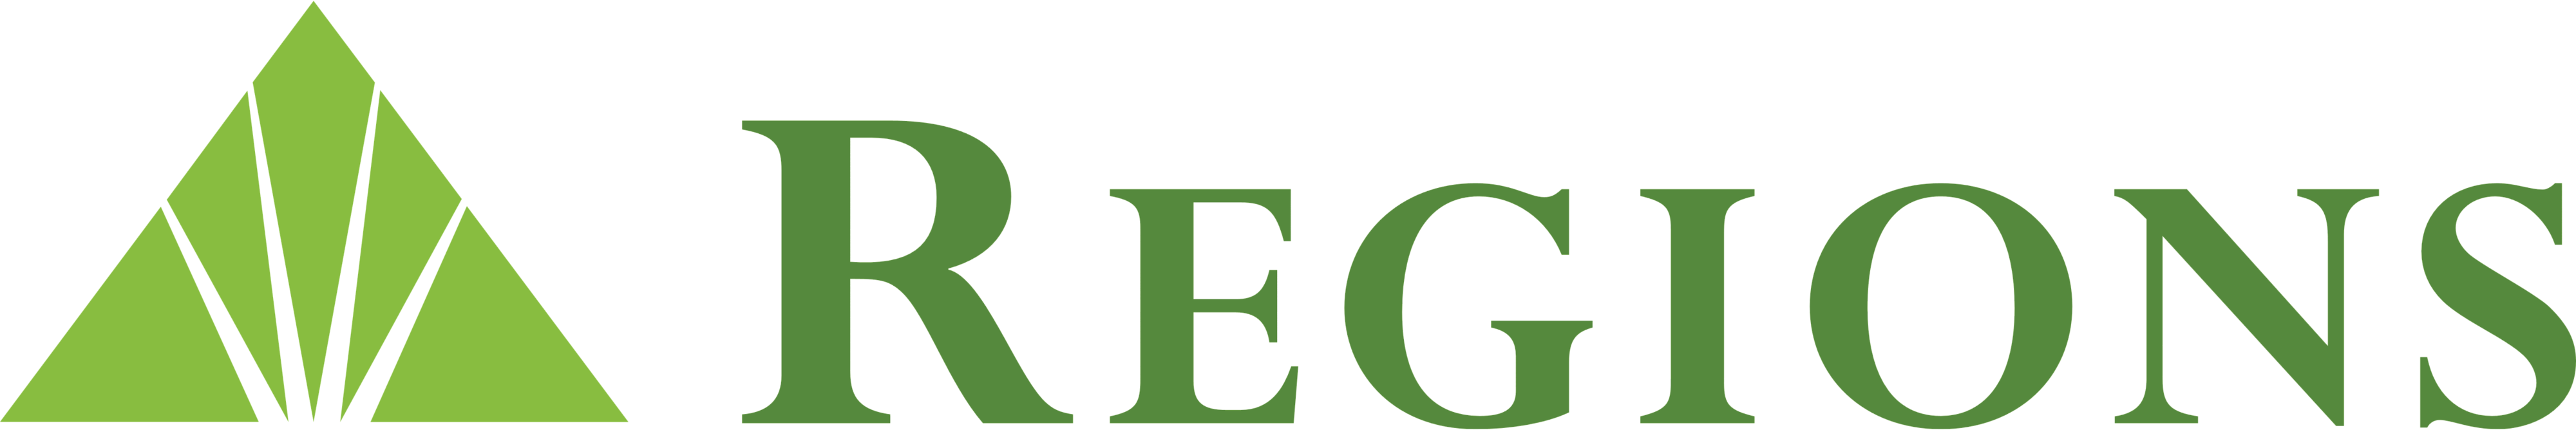 Logo der Regions Bank